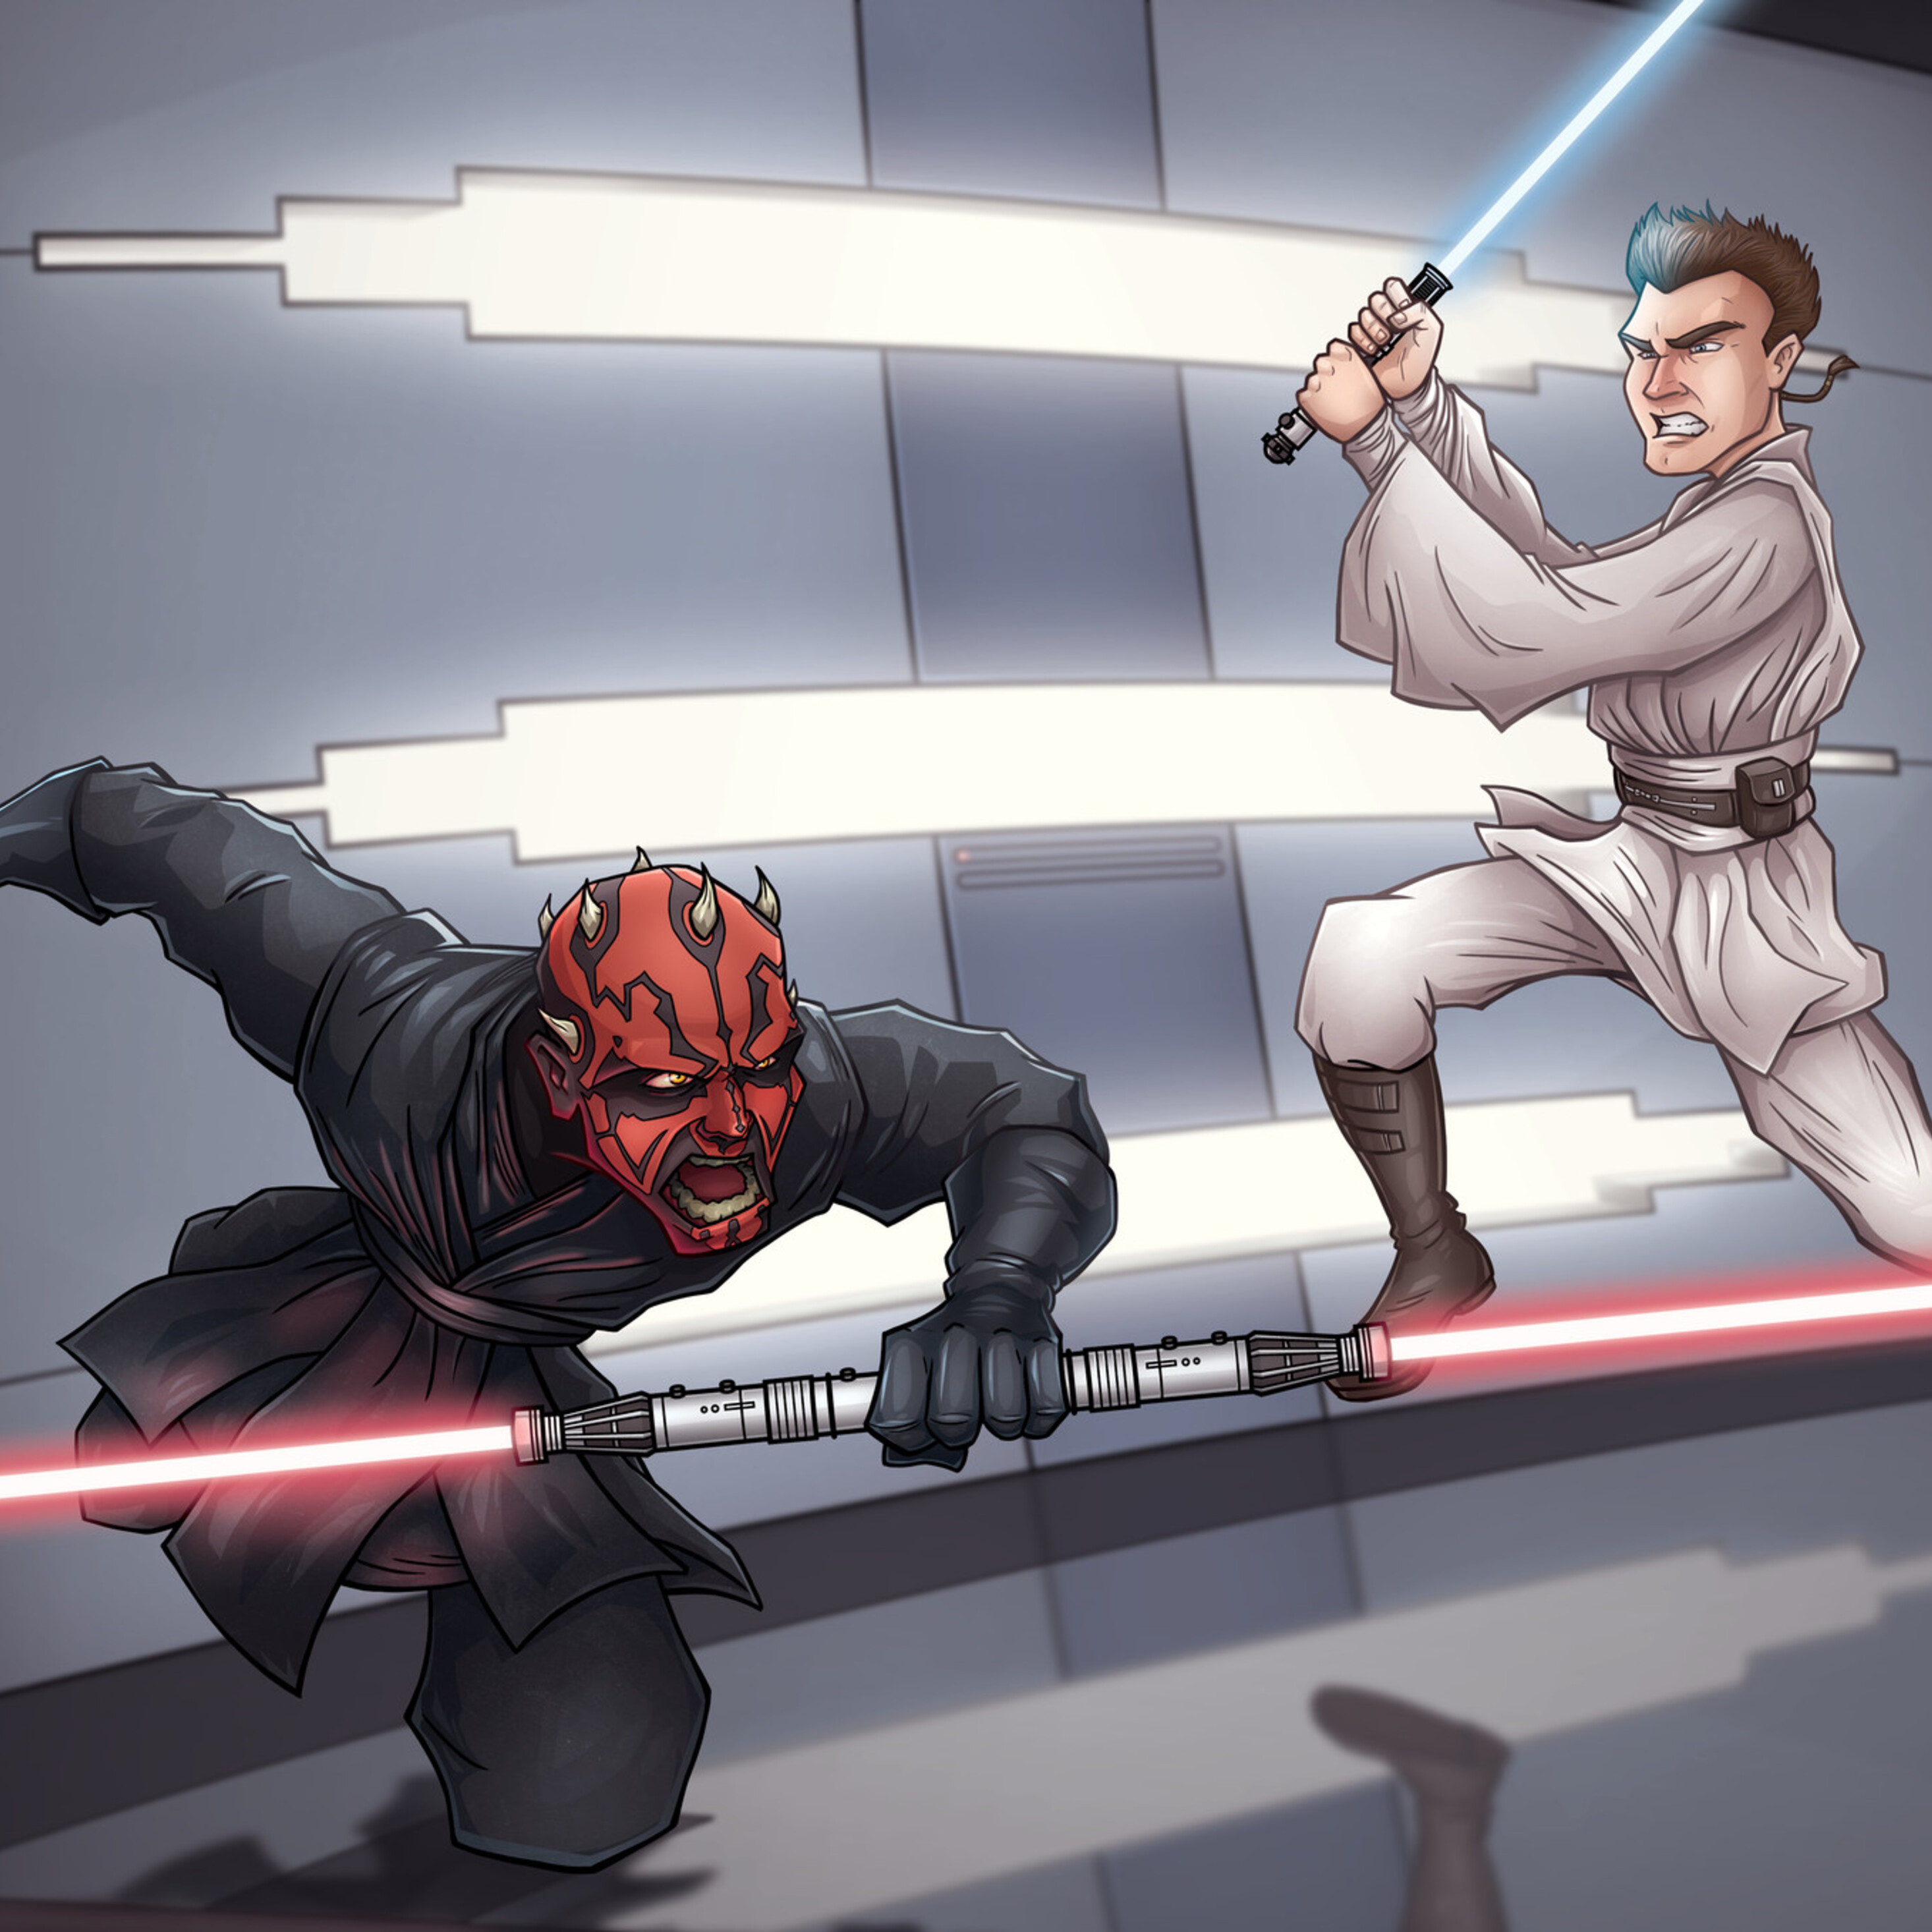 Звездные войны дуэль. Obi Wan vs Darth Maul. Дарт мол и Оби Ван. Оби Ван против Дарта мола. Оби Ван и Дарт мол повстанцы.